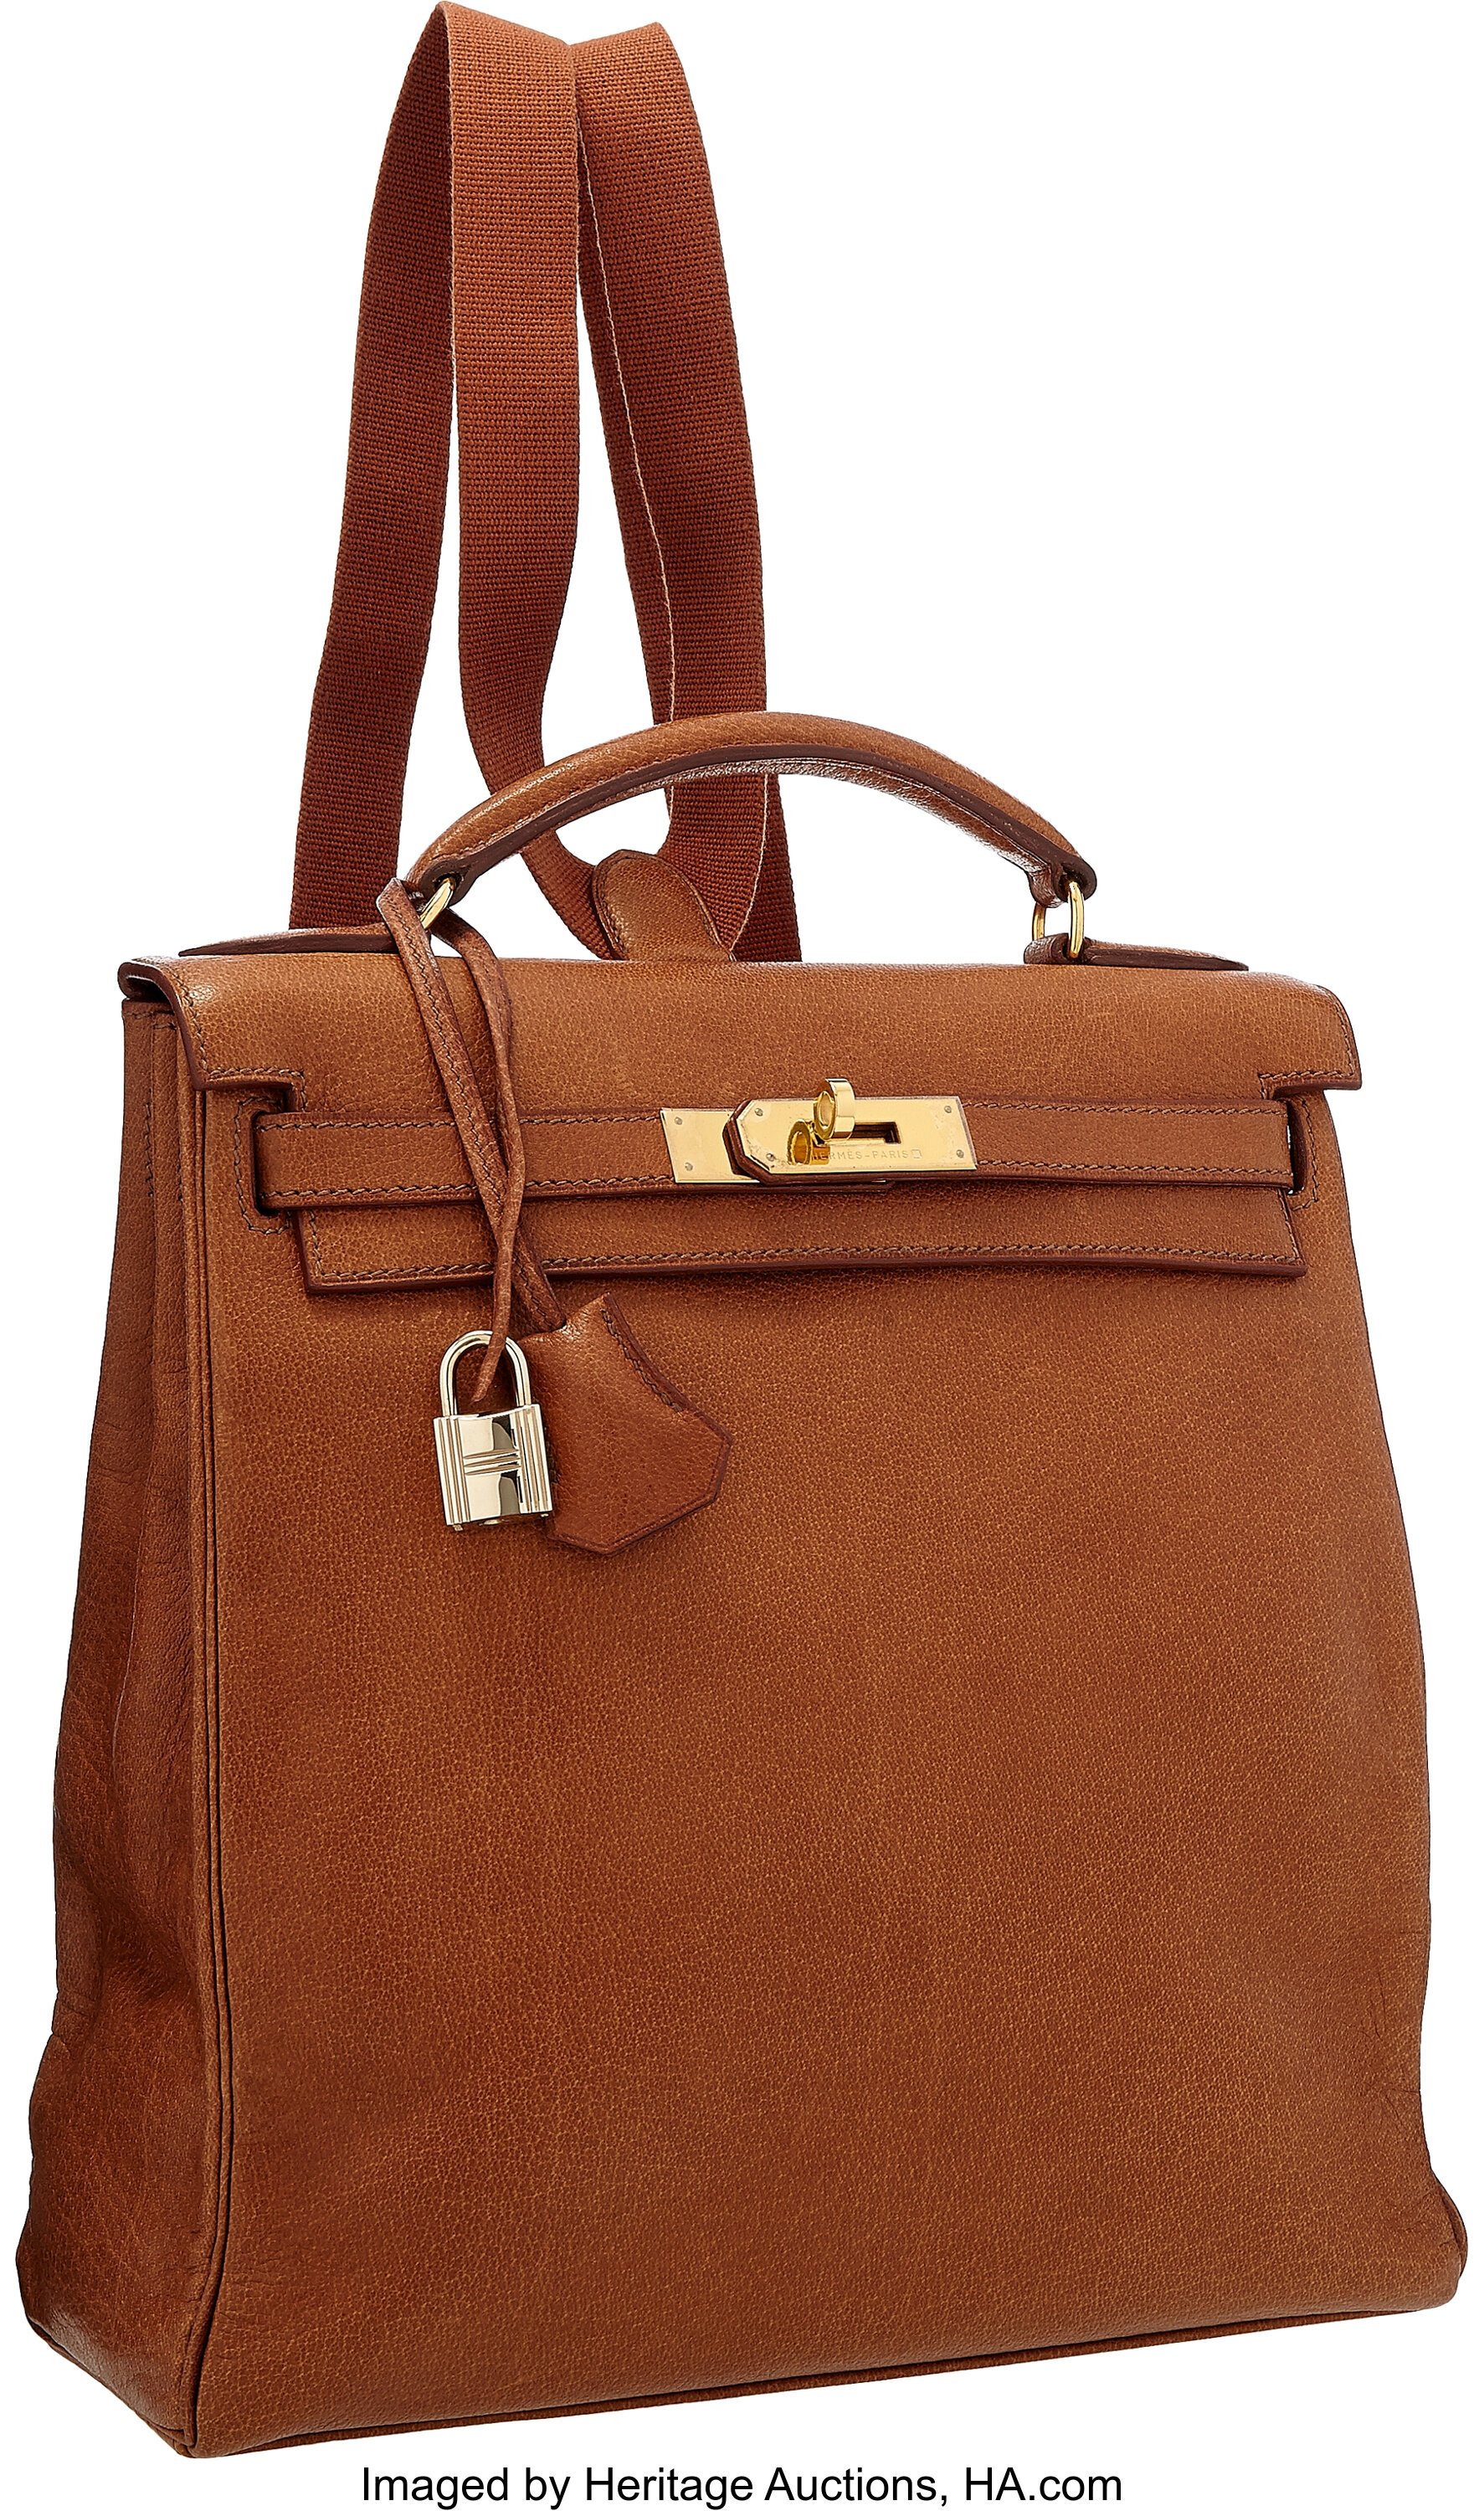 Fashionable Hermes Kelly leather bag - 121 Brand Shop